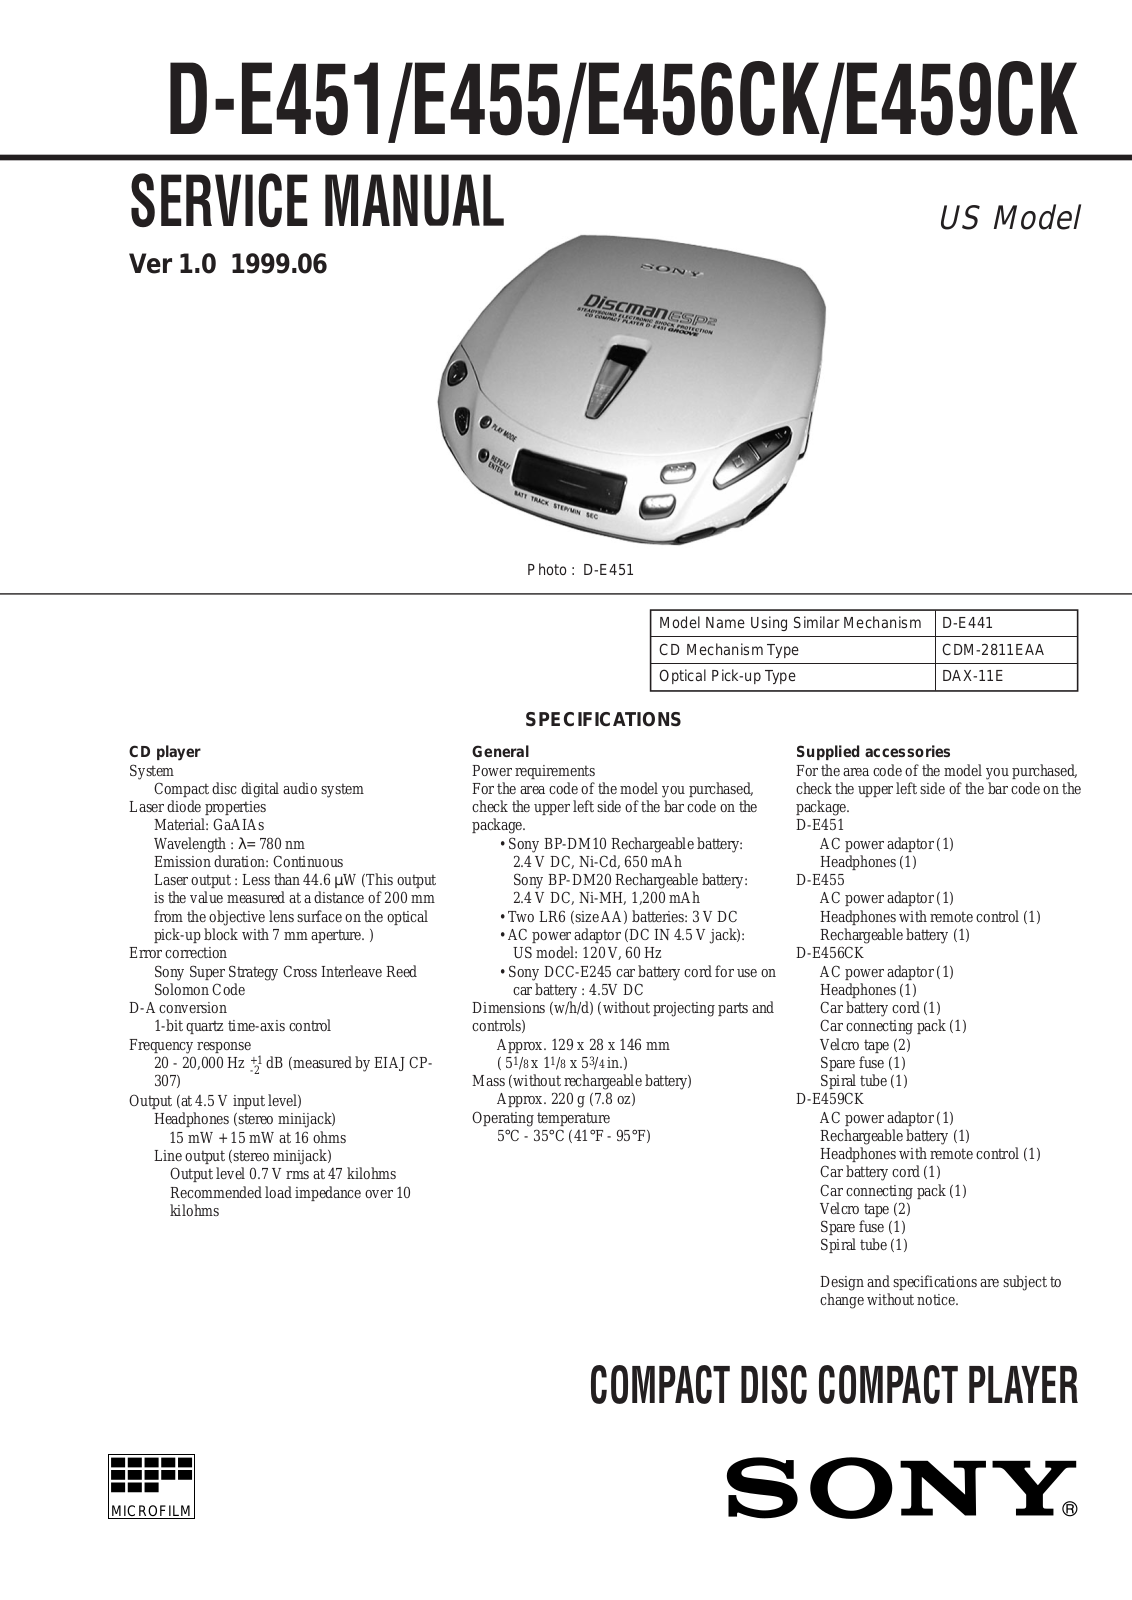 Sony DE-451, DE-456-CK, DE-455, DE-459-CK Service manual